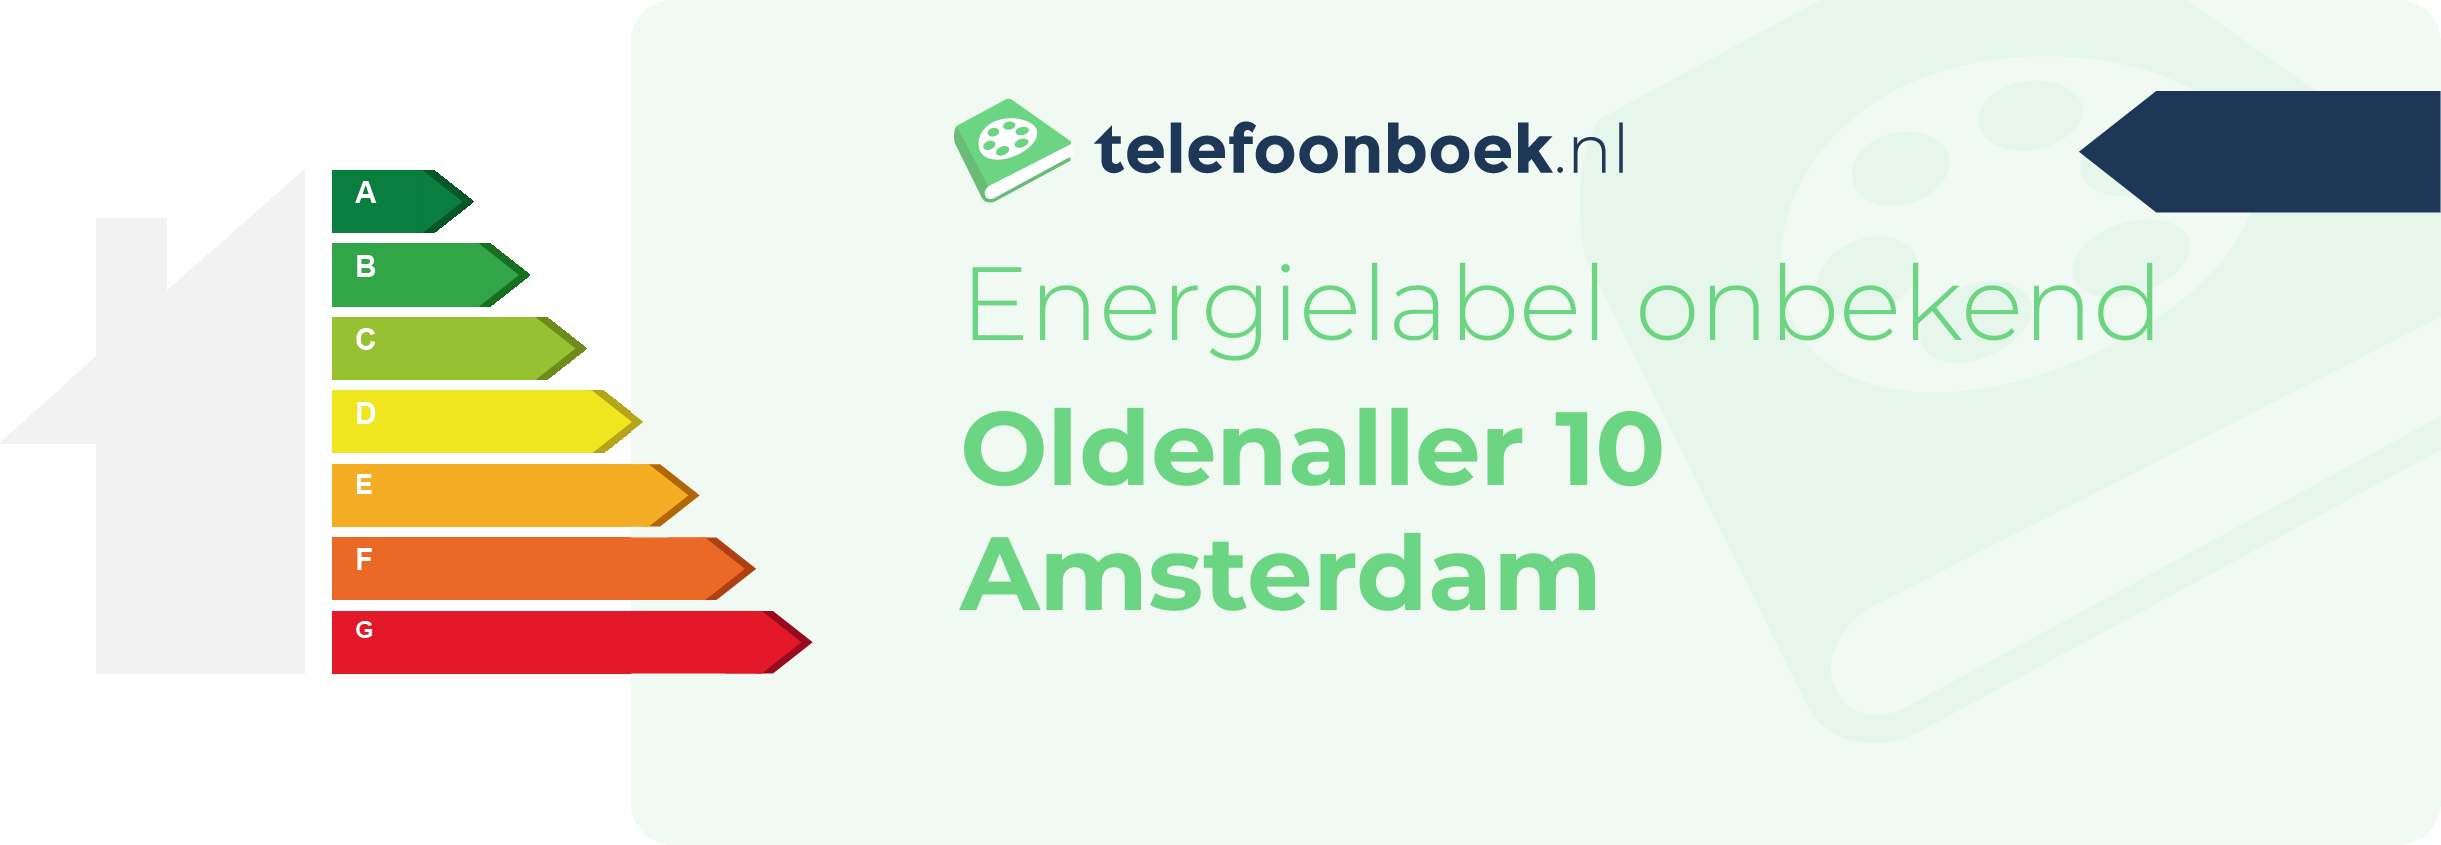 Energielabel Oldenaller 10 Amsterdam